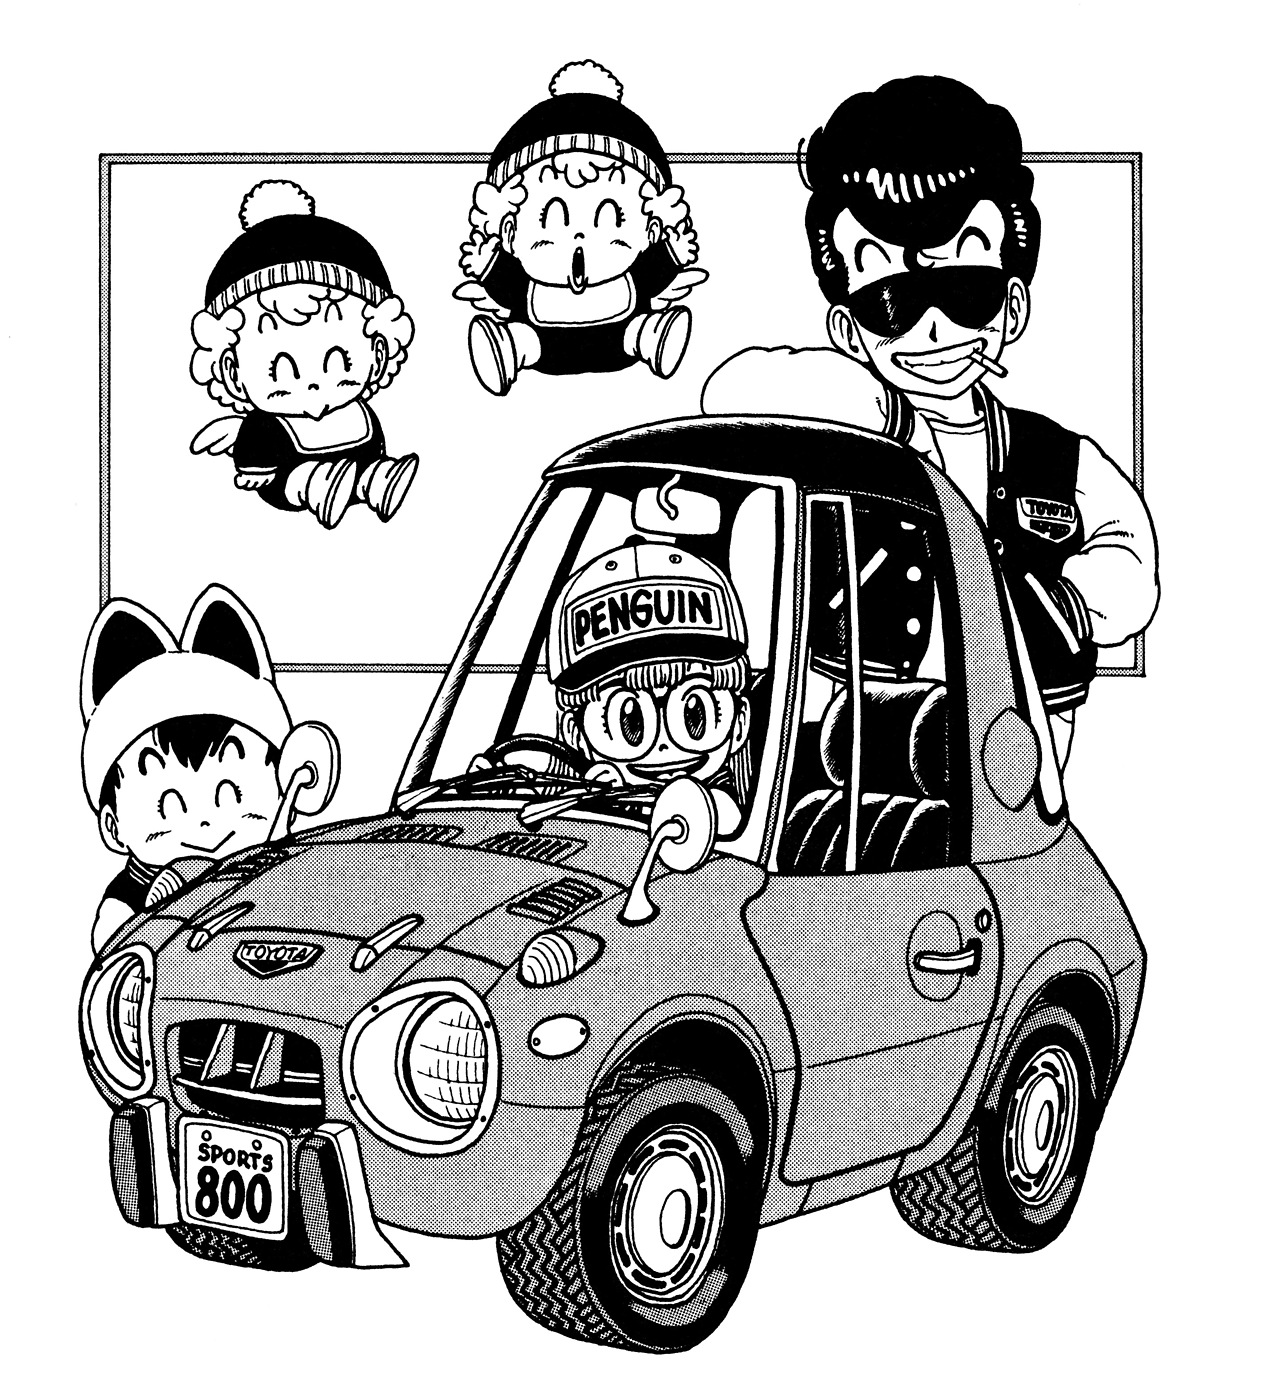 Coches y Comics | Akira Toriyama